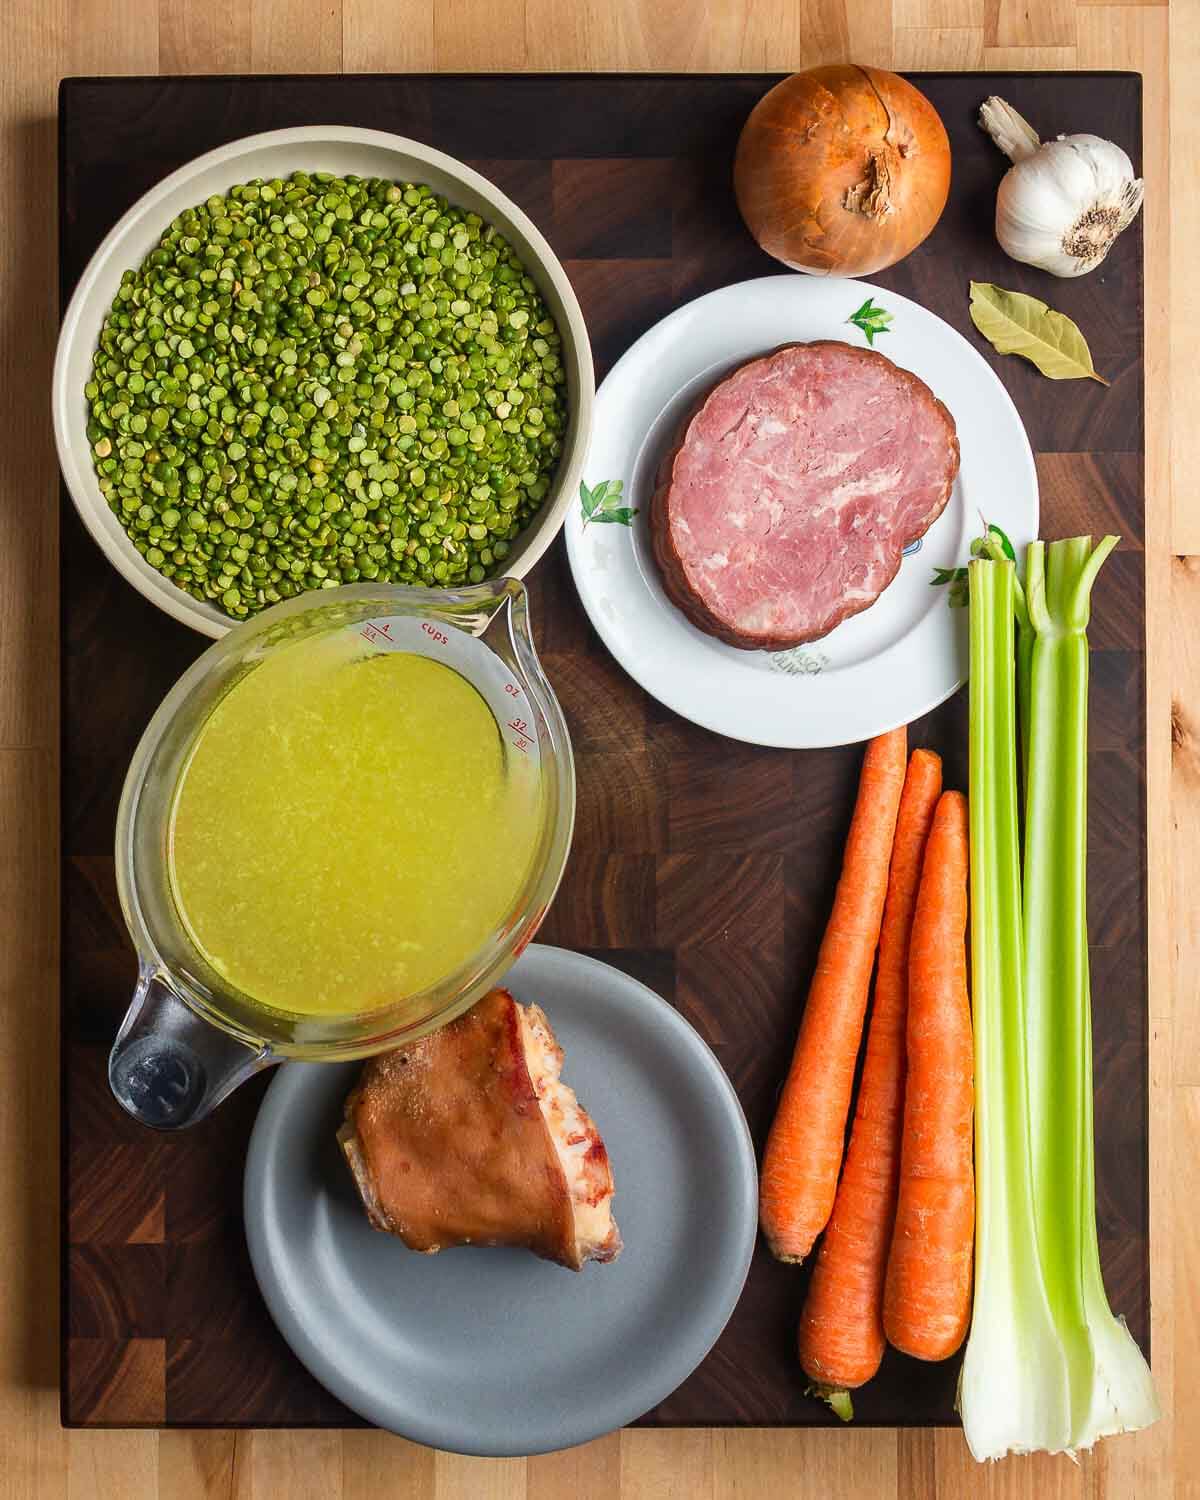 Ingredients shown: split peas, onion, garlic, bay leaf, ham, chicken stock, ham hock, carrots, and celery.